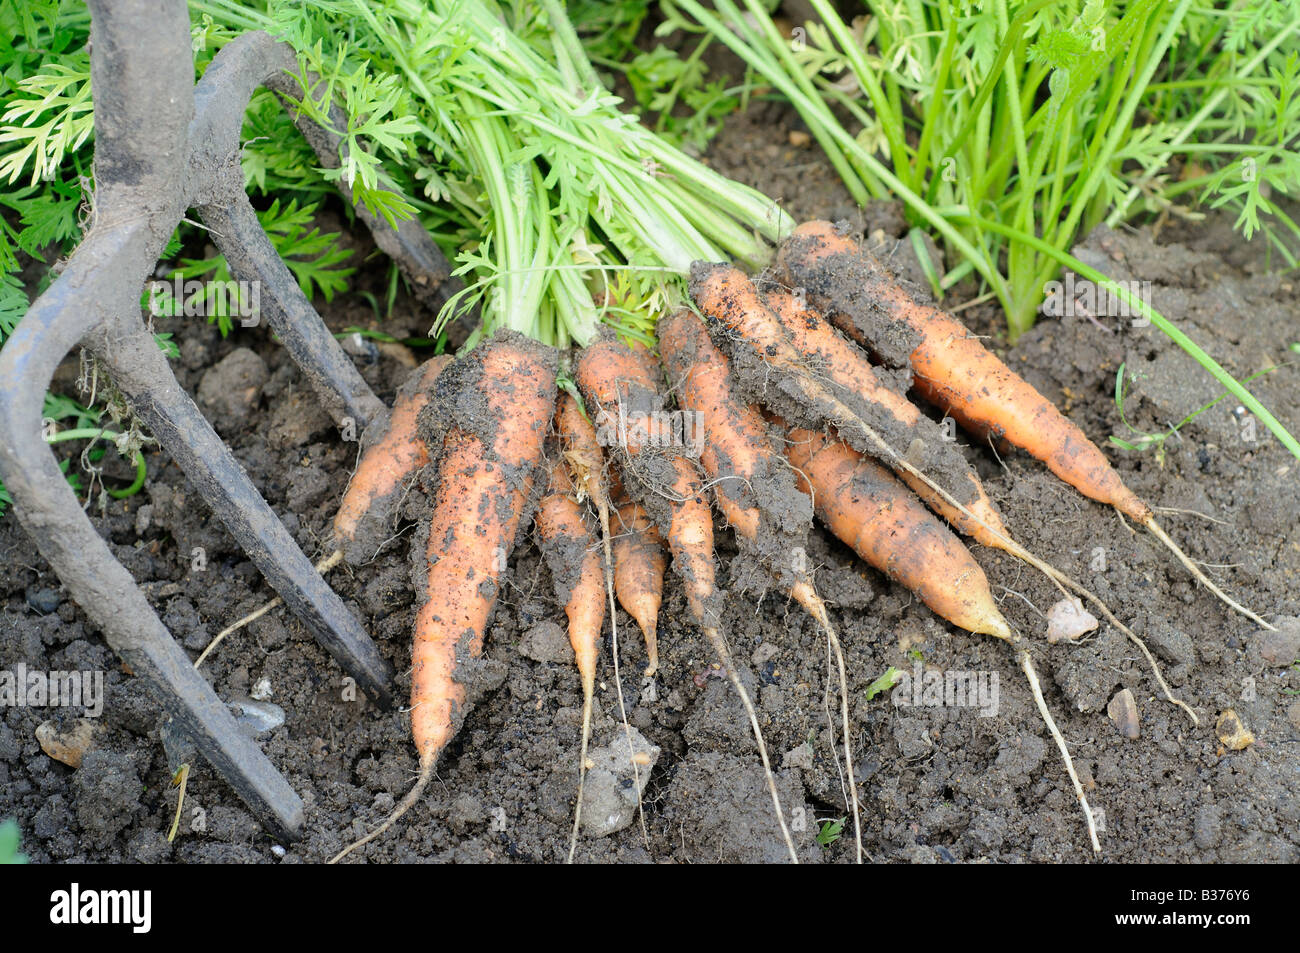 Frisch nach Hause angebauten Bio Karotten Nantes Norfolk UK Augustanfang gegraben Stockfoto